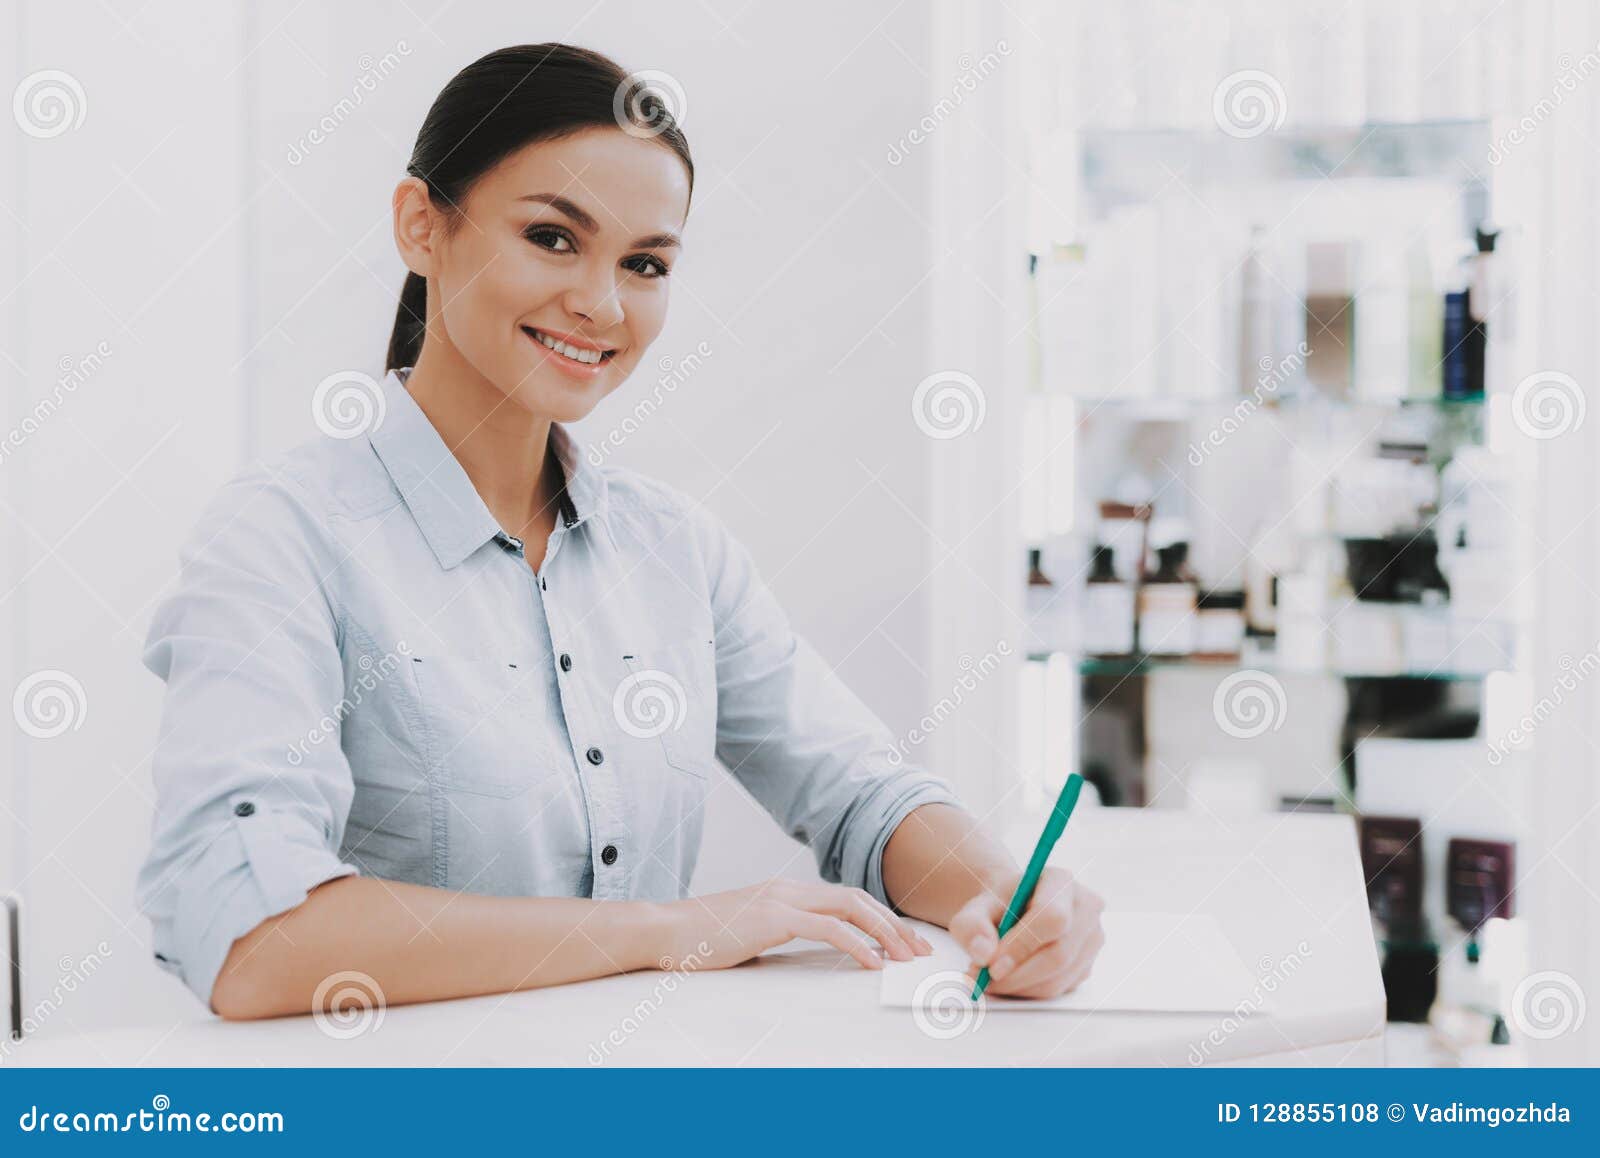 Woman Receptionist In Workplace In Beauty Salon Stock Photo